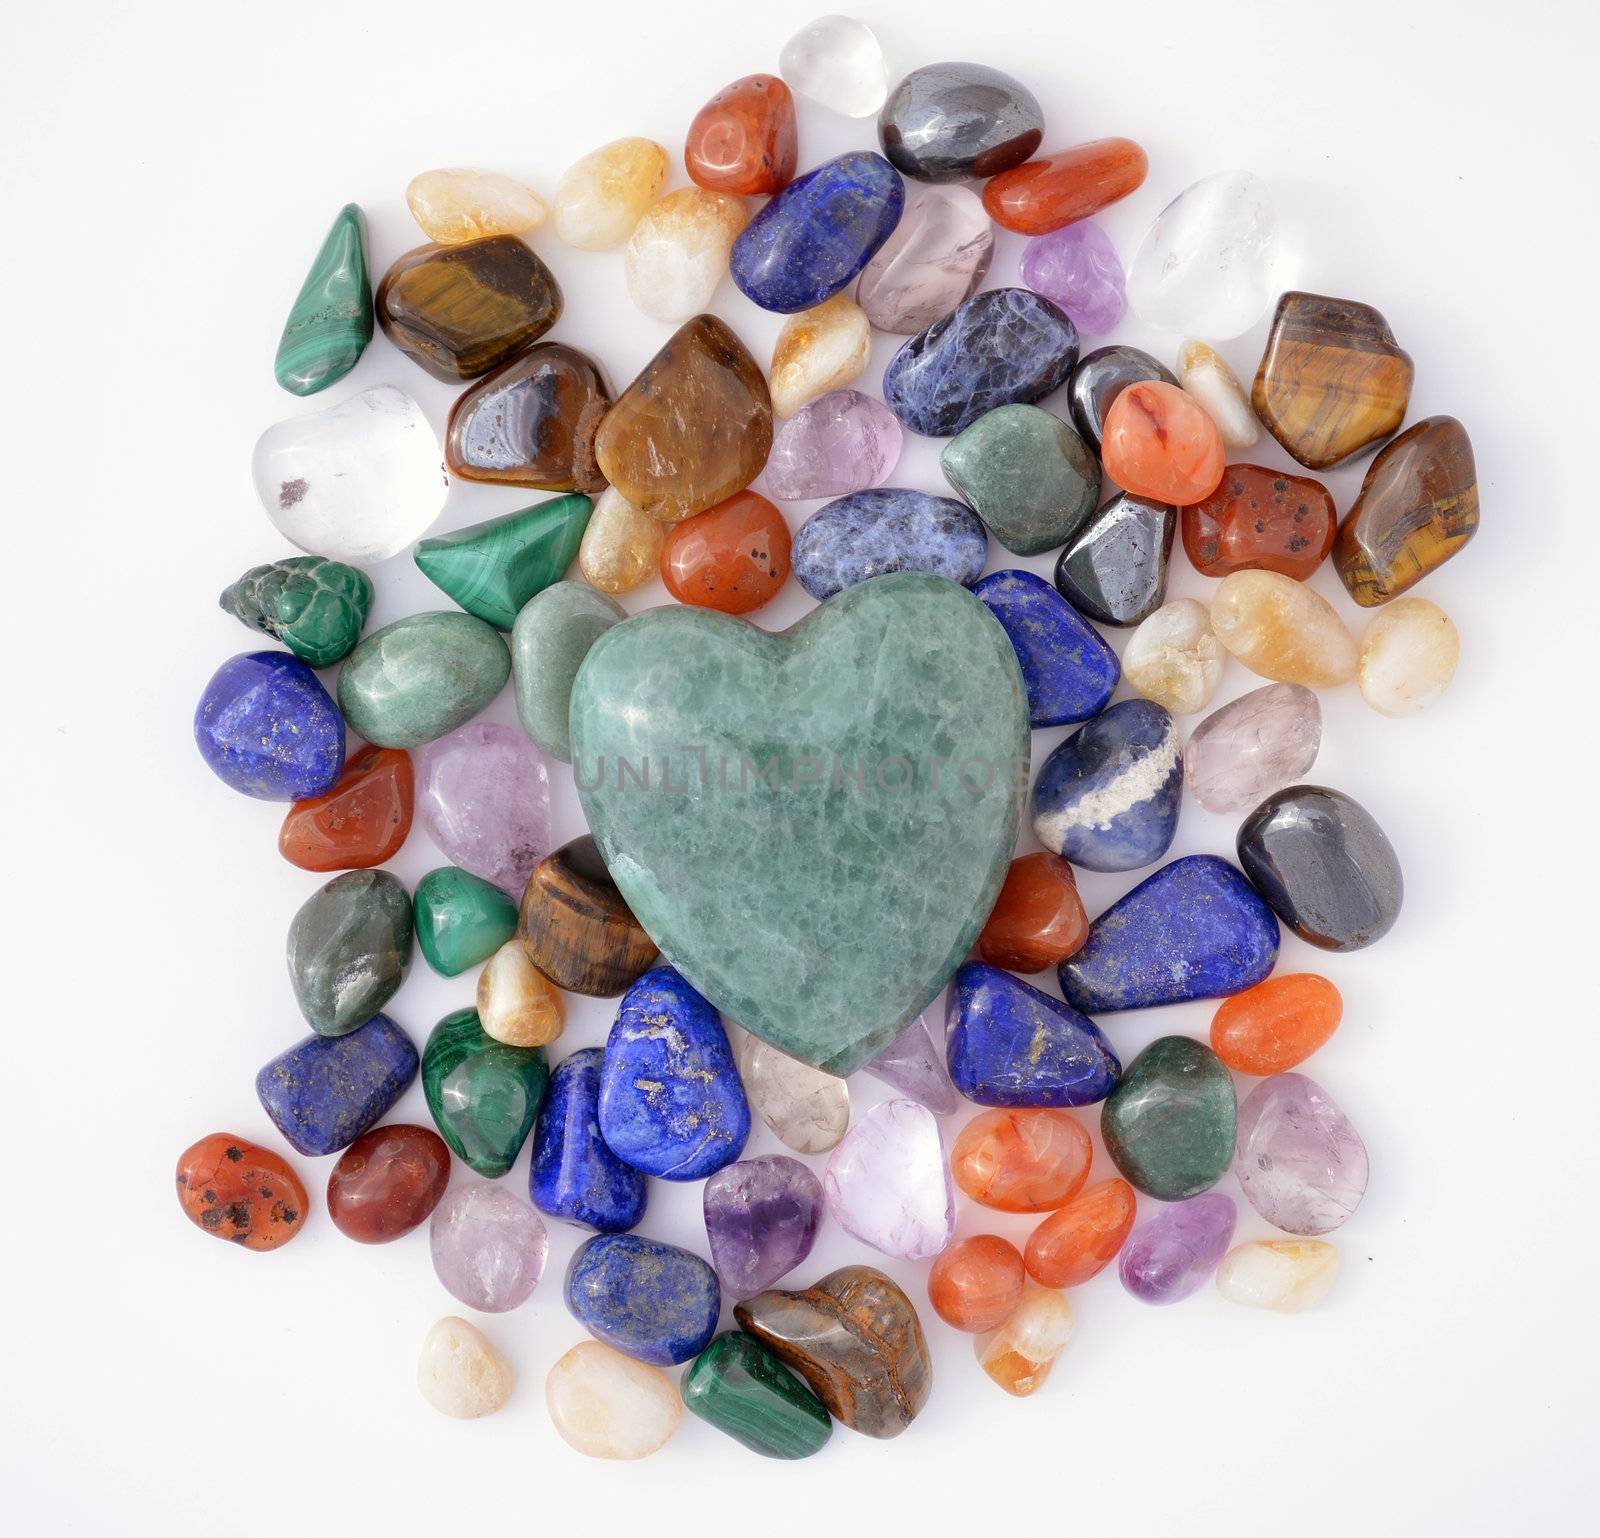 Green quartz heart among various semiprecious gems